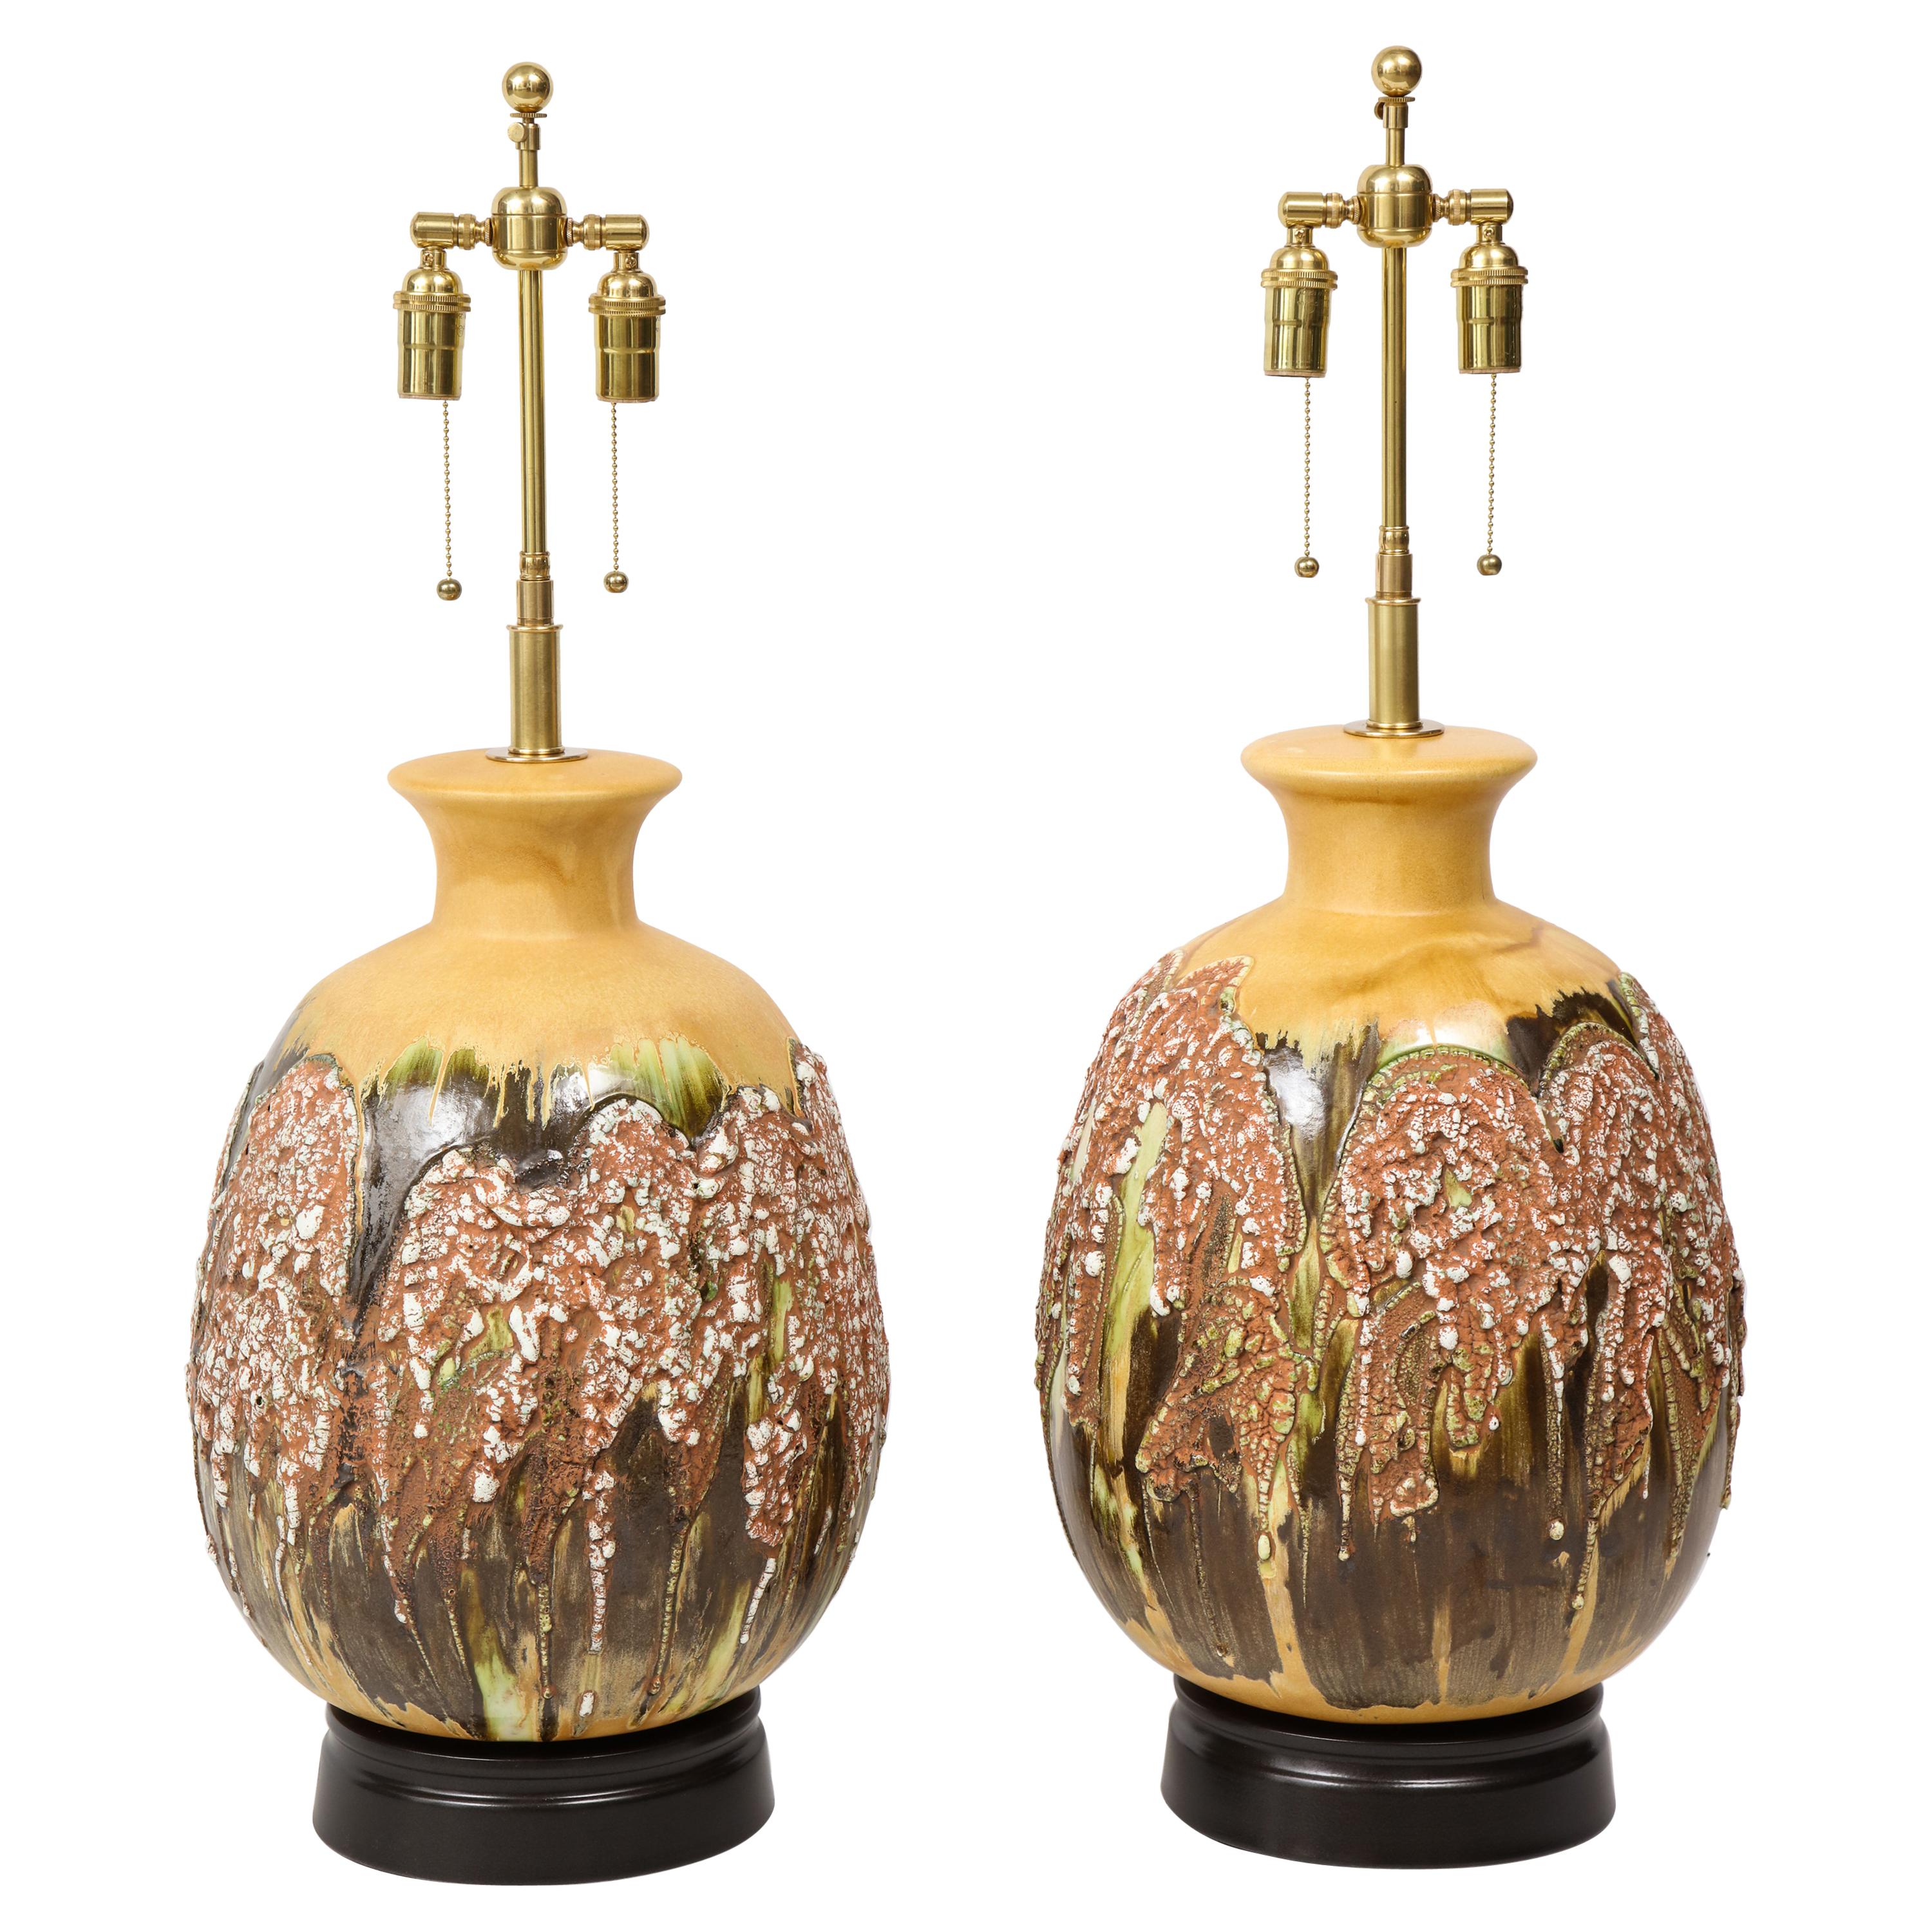 Pair of Extra Large Italian Volcanic Glazed Ceramic Lamps